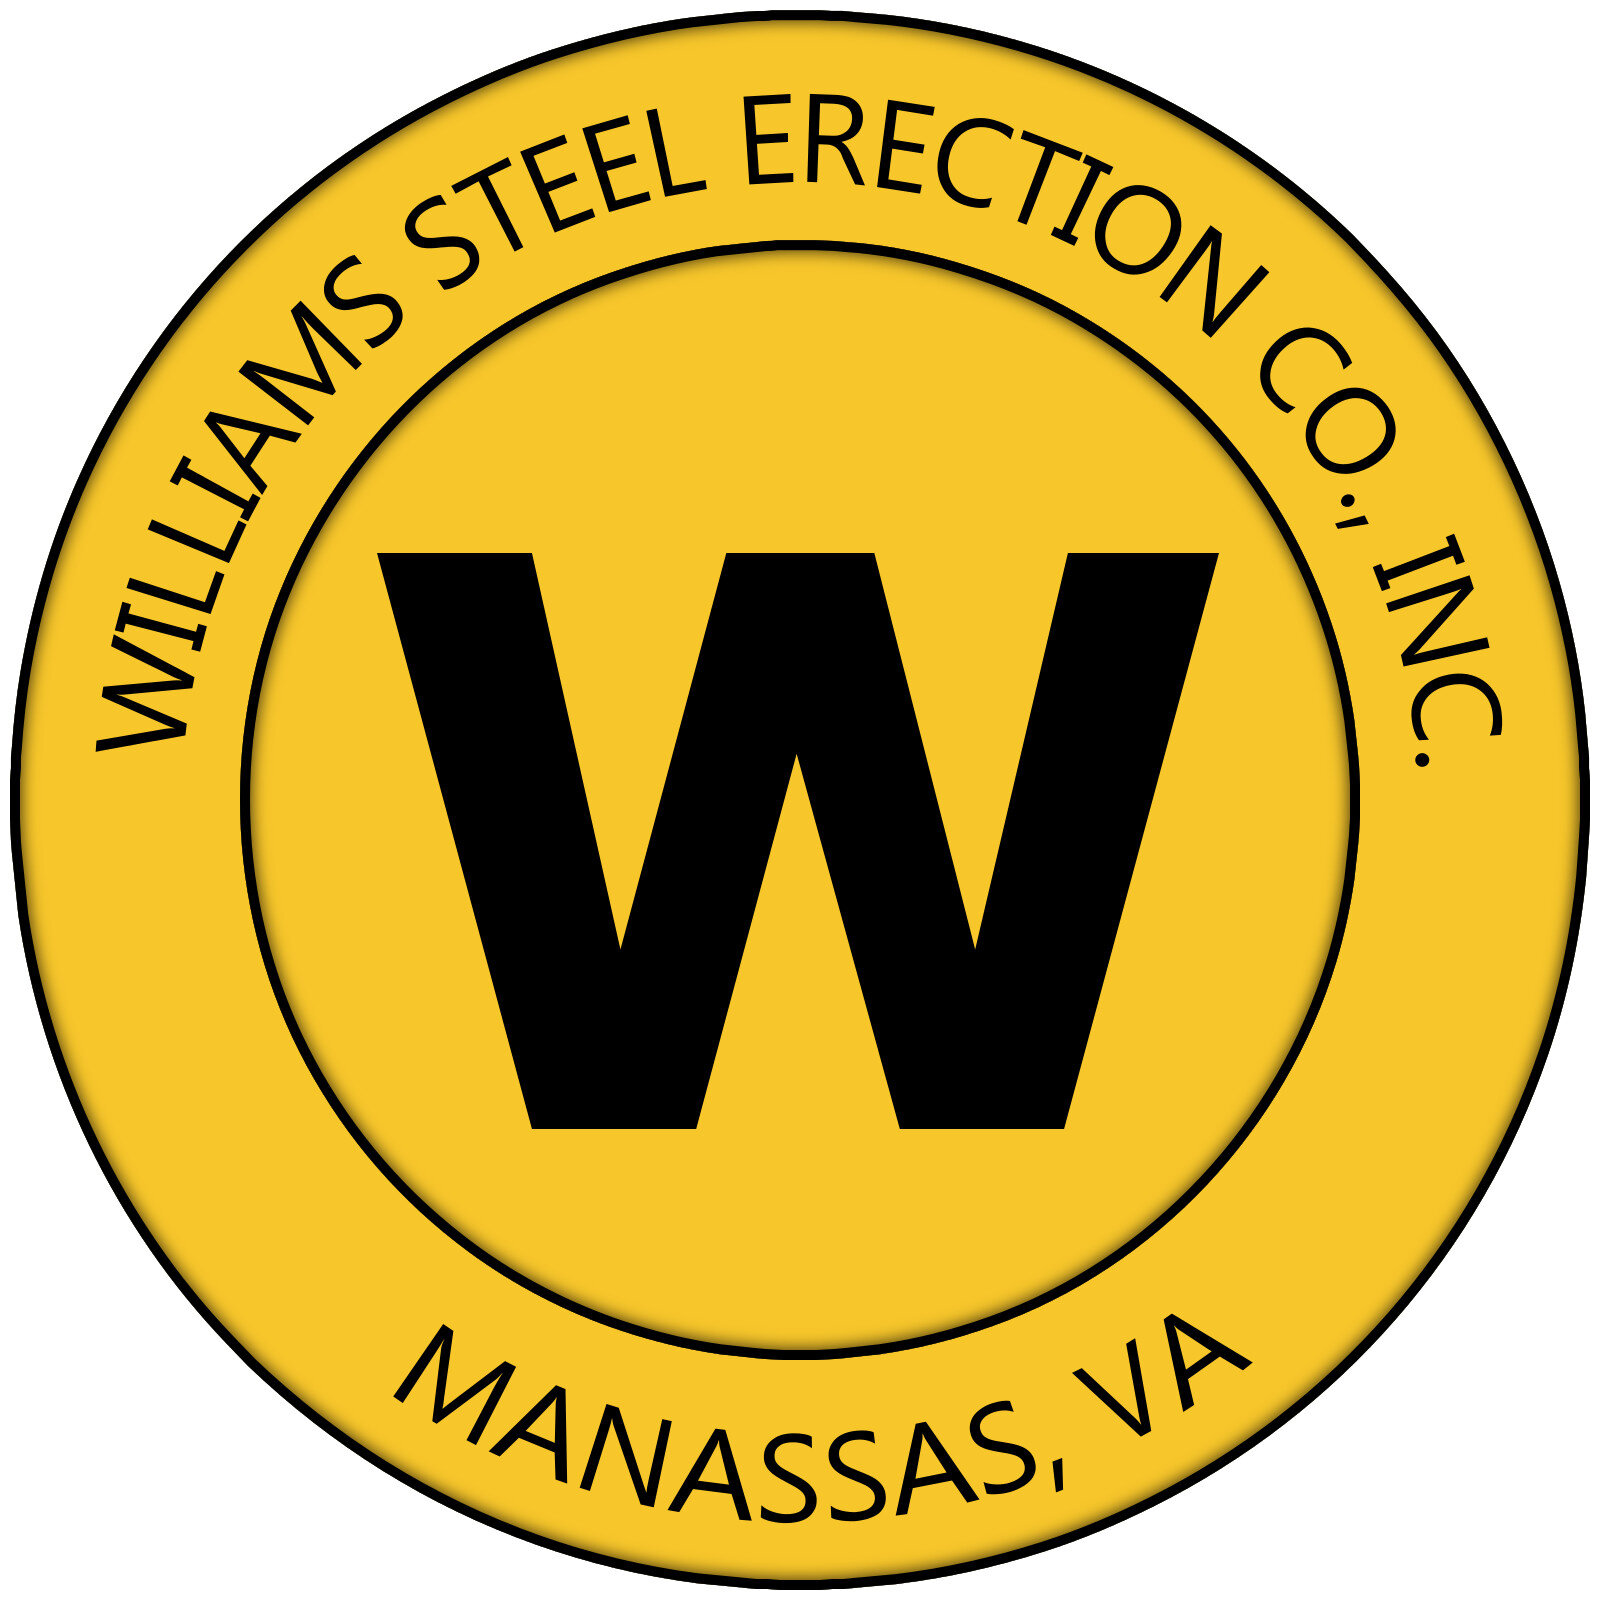 Williams Steel Erection Co.